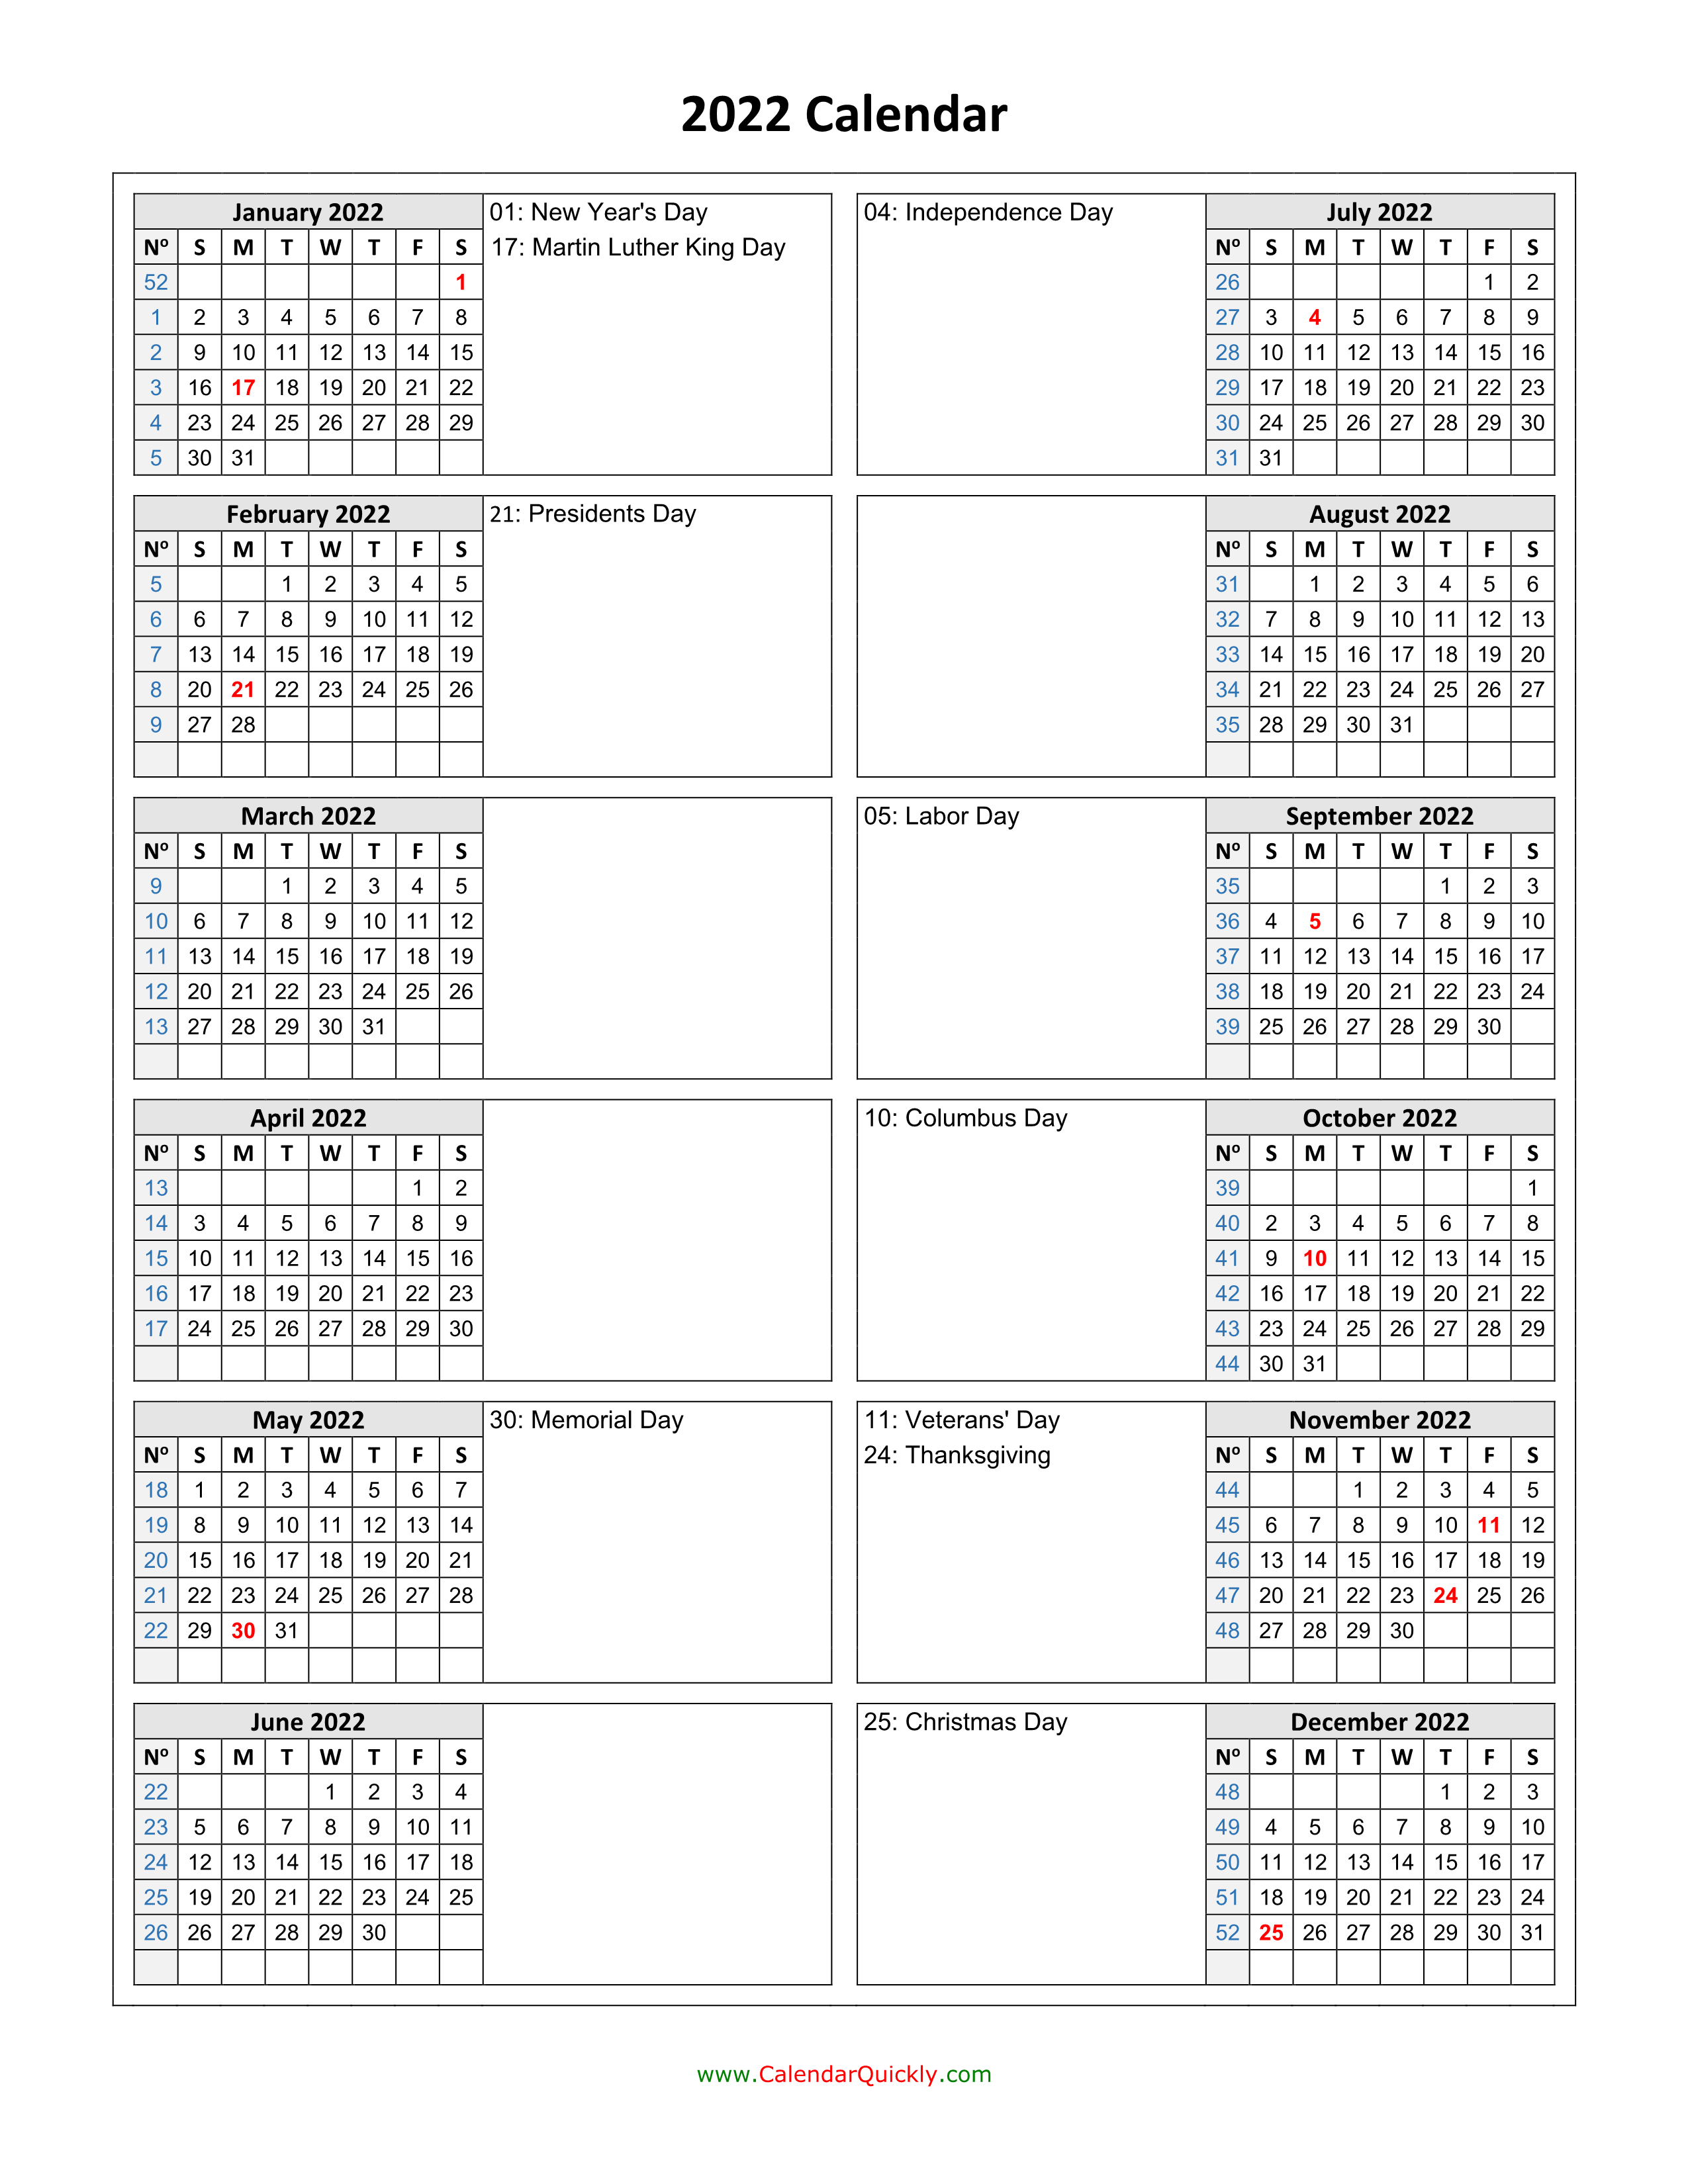 Holidays Calendar 2022 Vertical Calendar Quickly